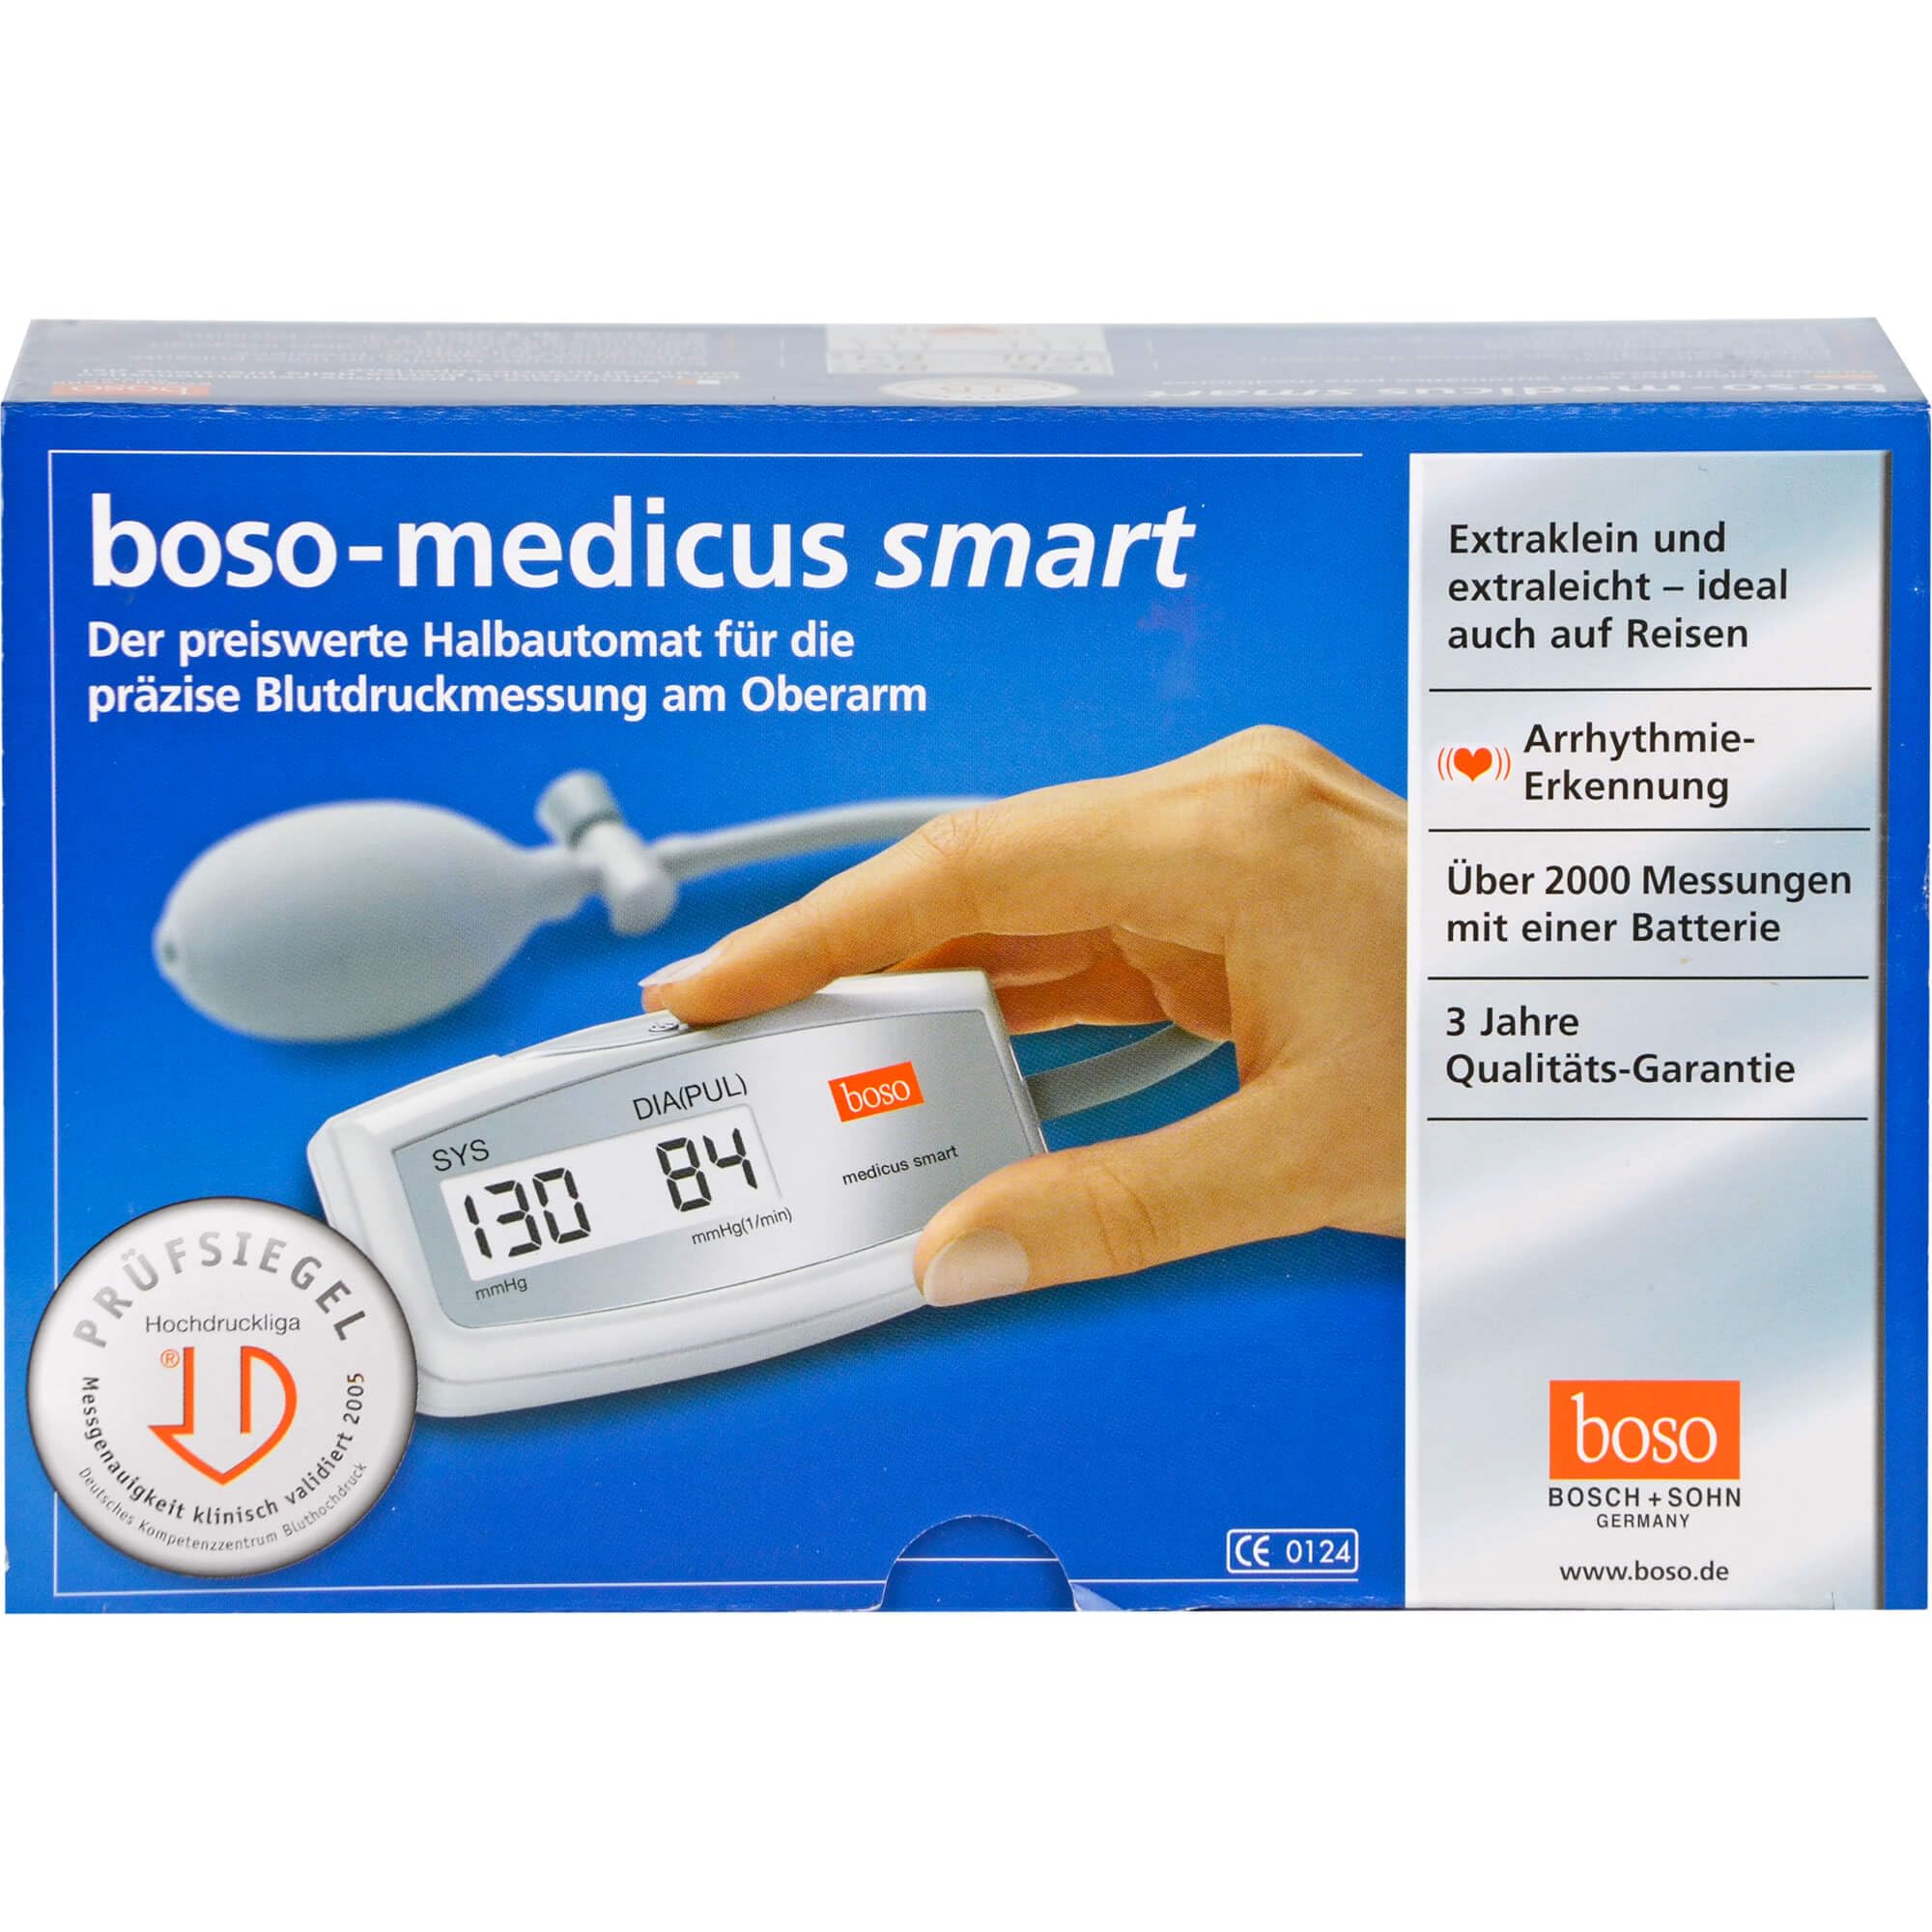 Boso medicus smart Blutdruckmessger�t, 1 St